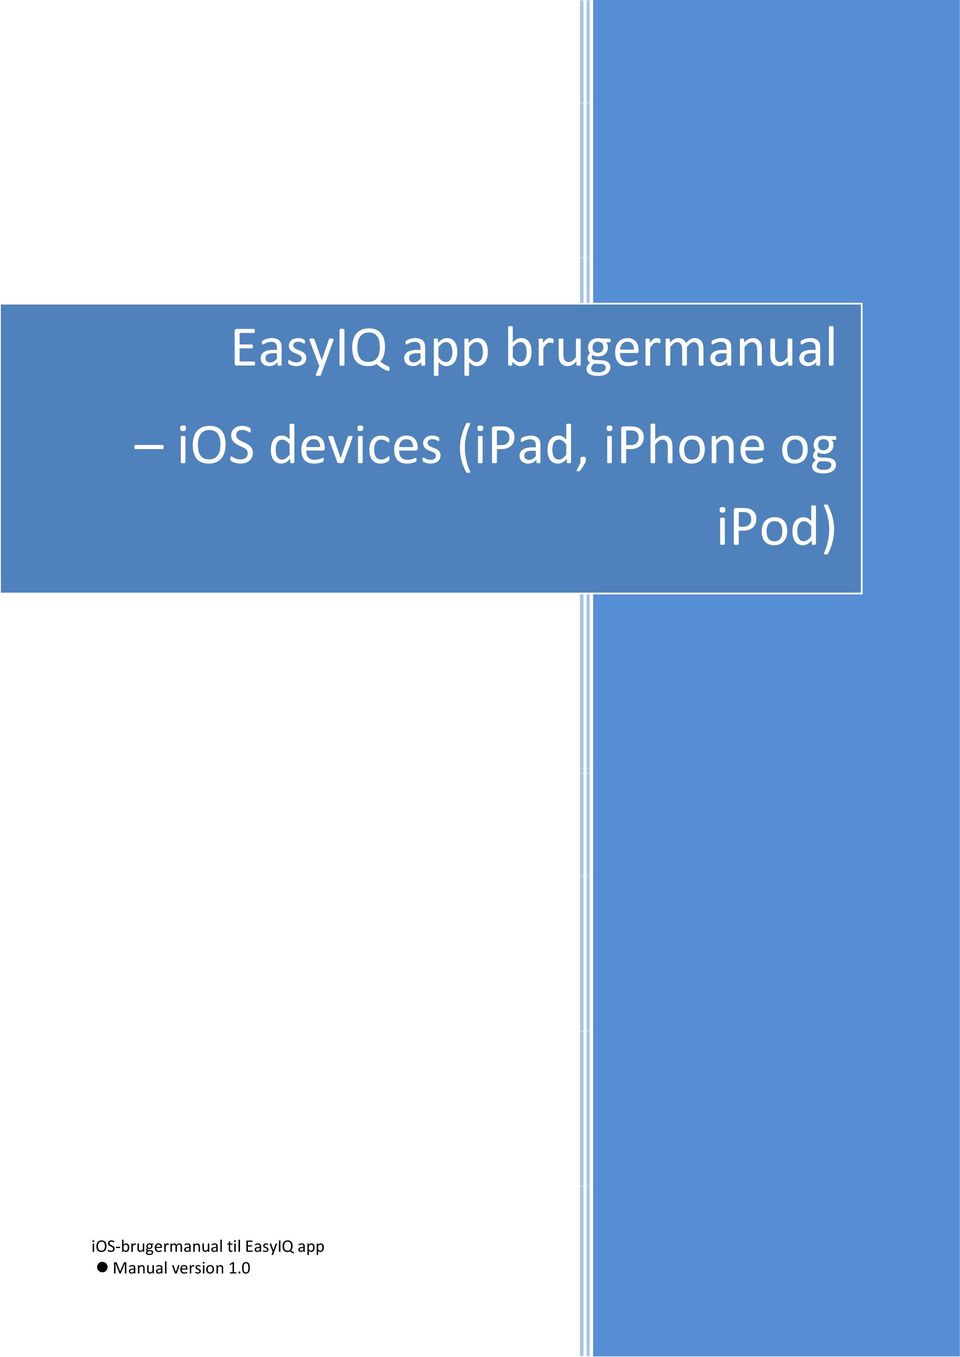 devices (ipad, iphone